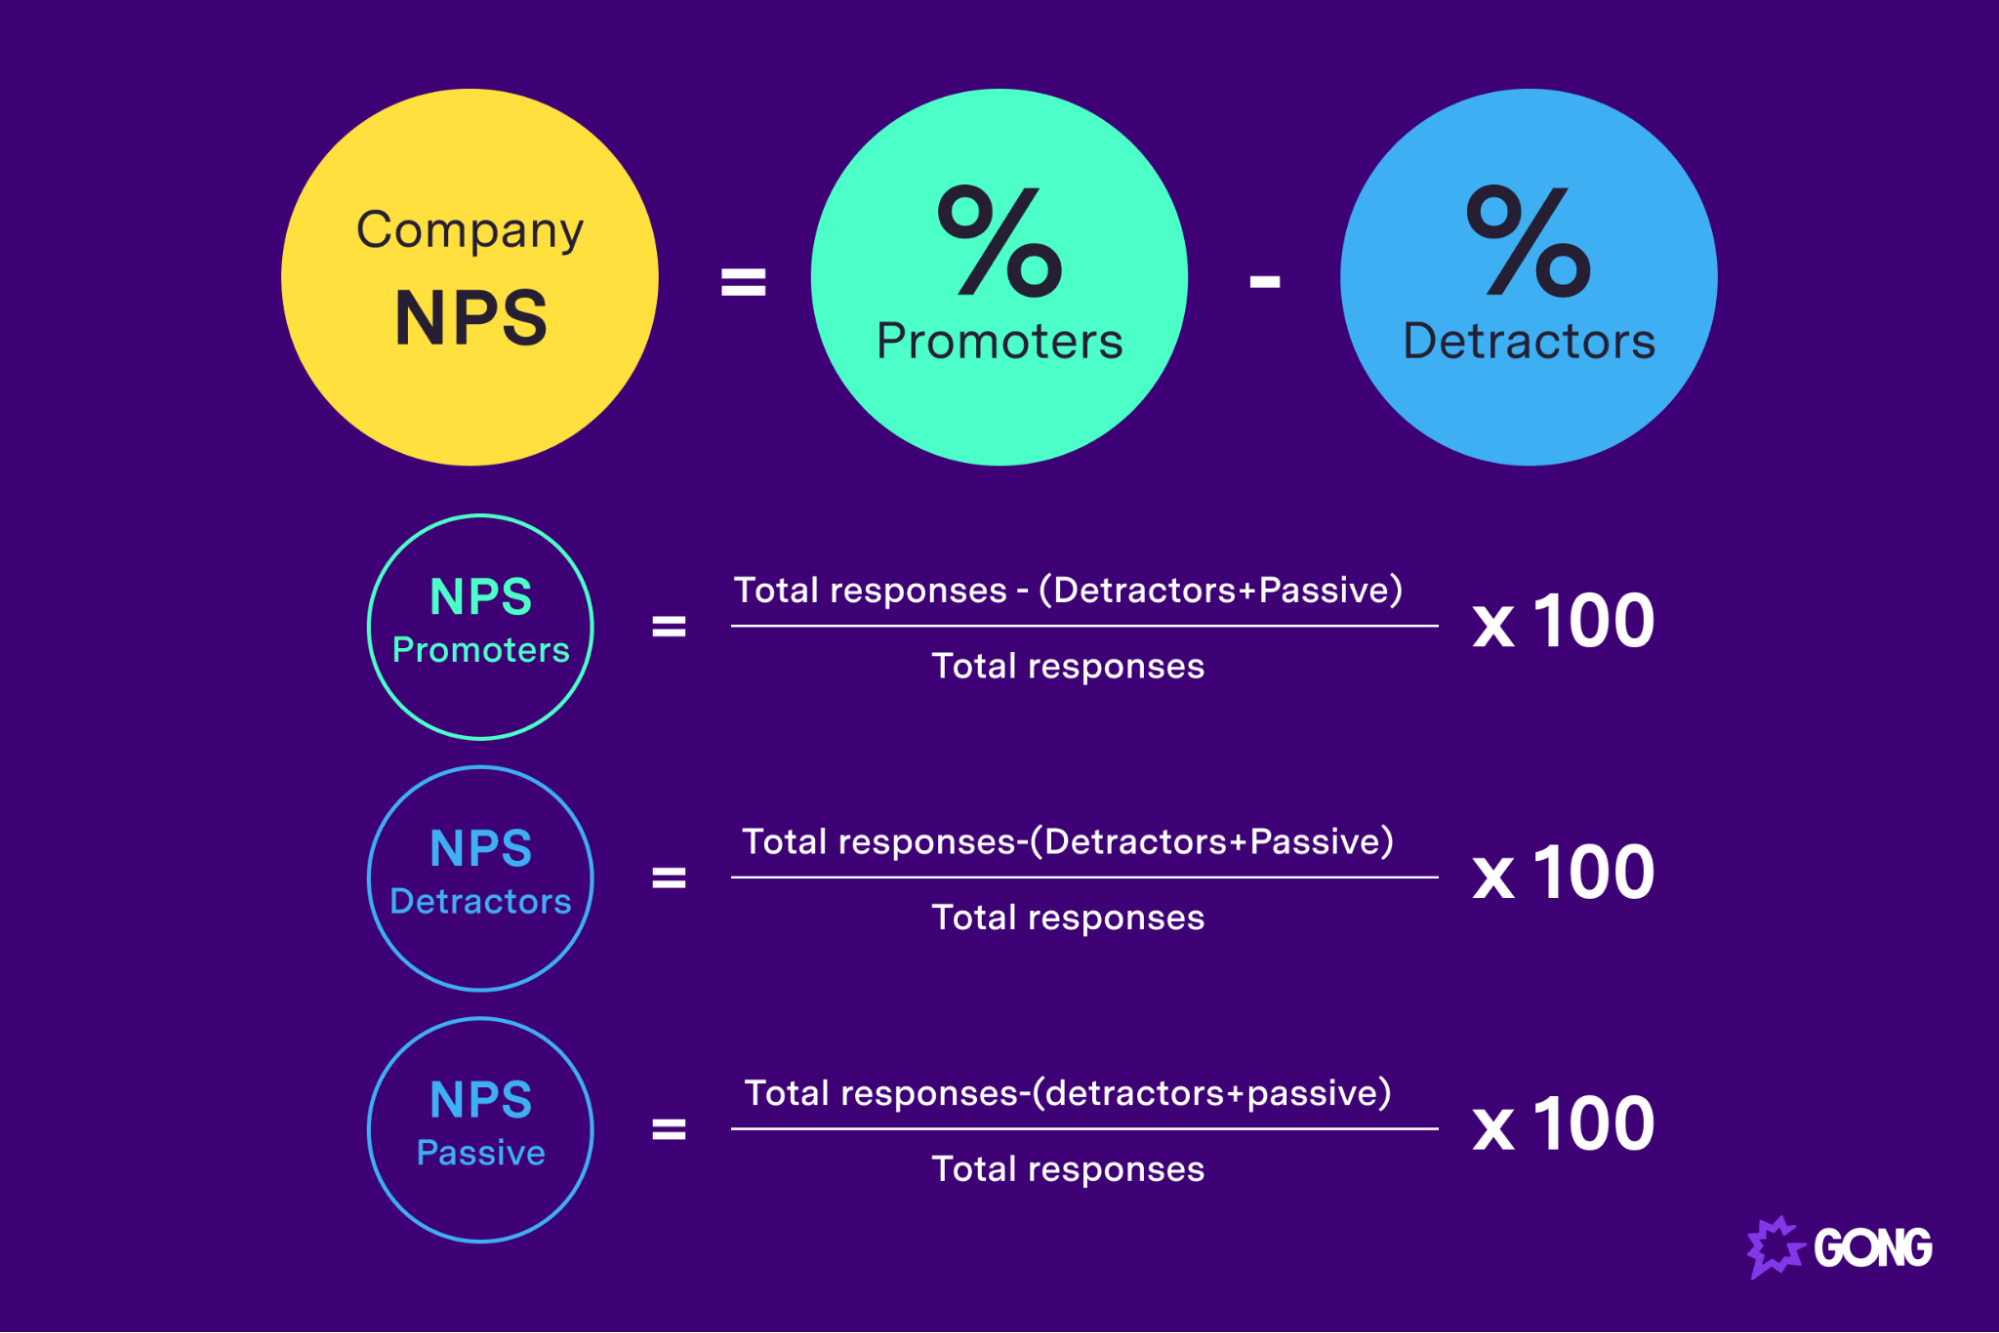 Net Promoter Score calculations